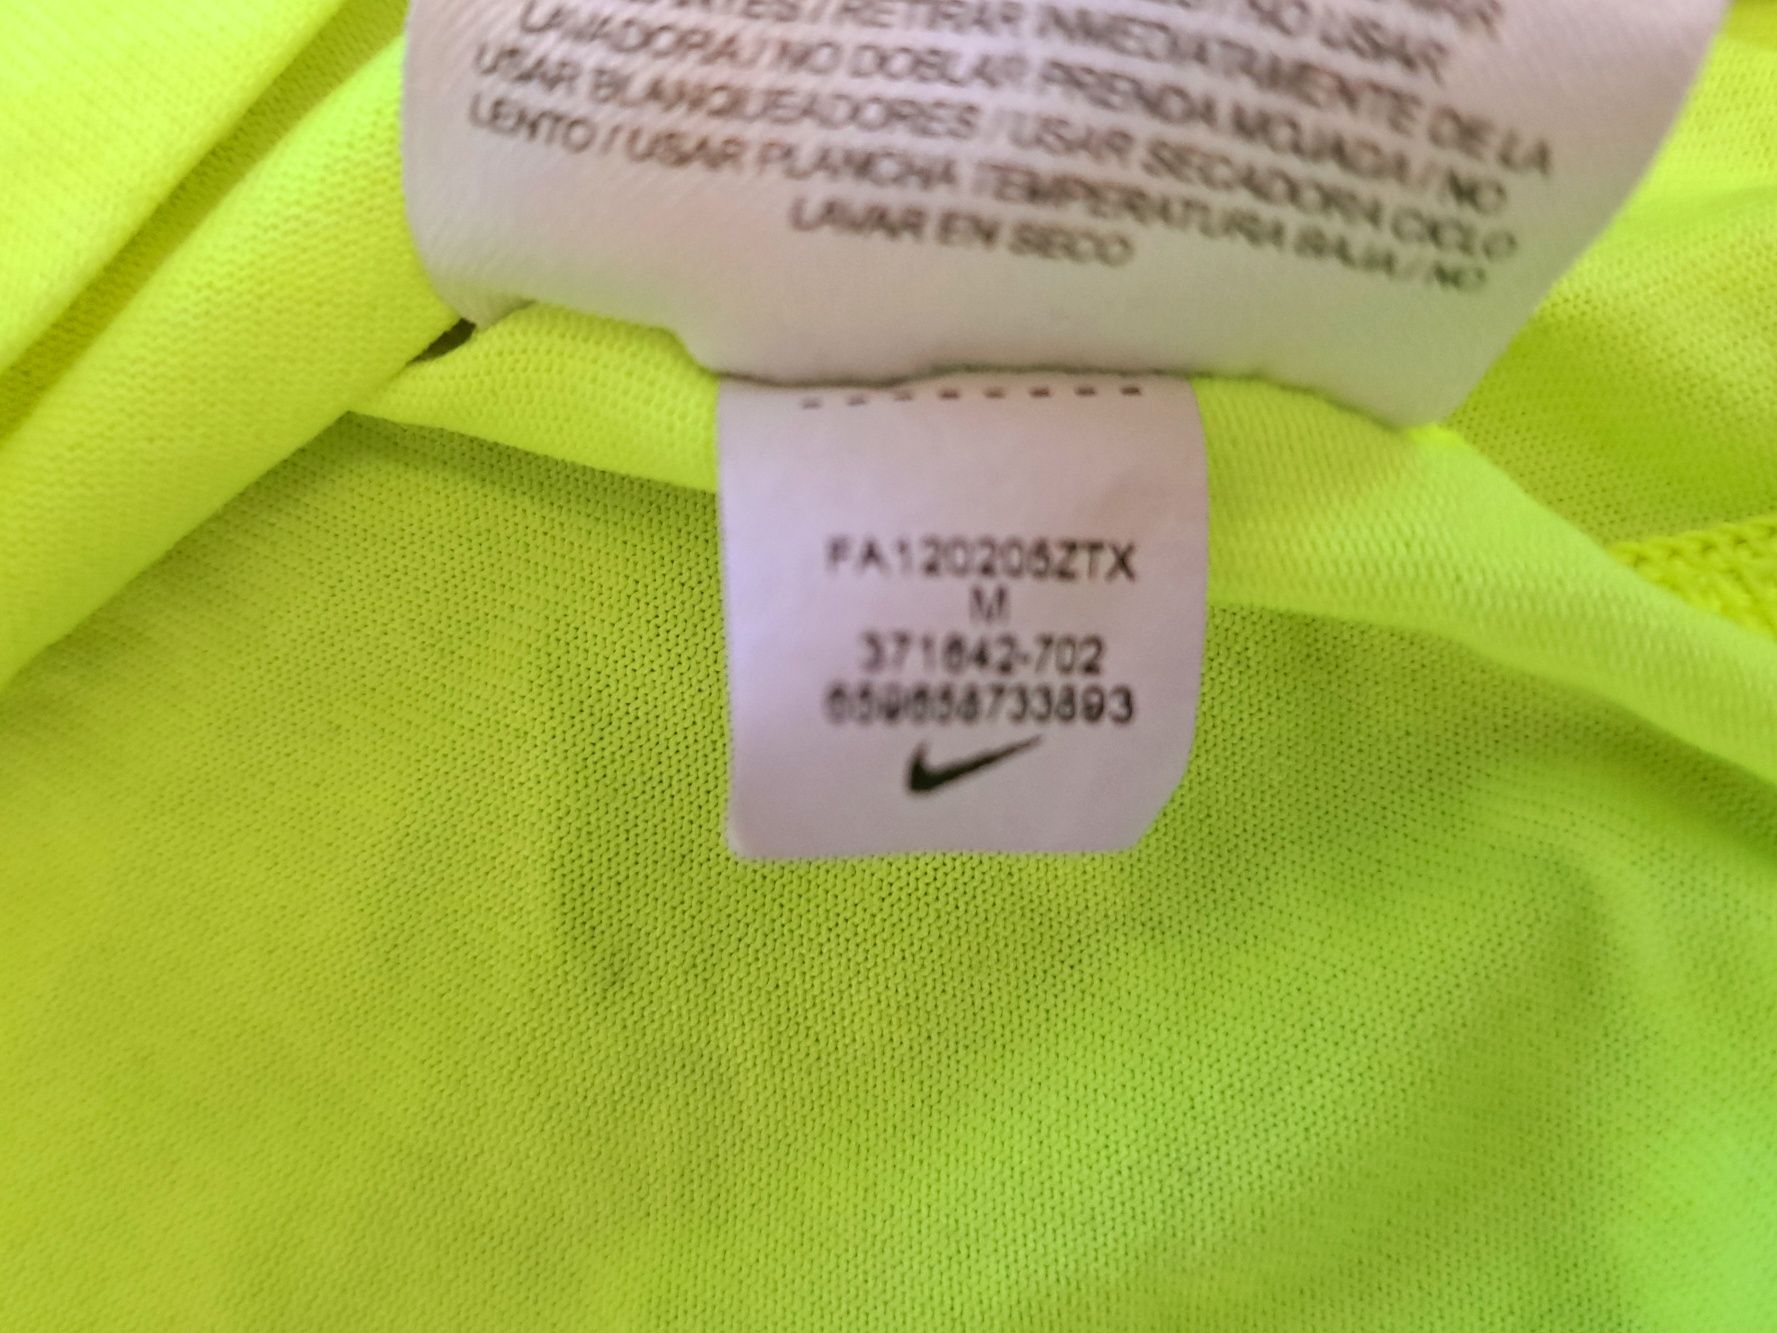 Nike DryFit-Ориг.тениска